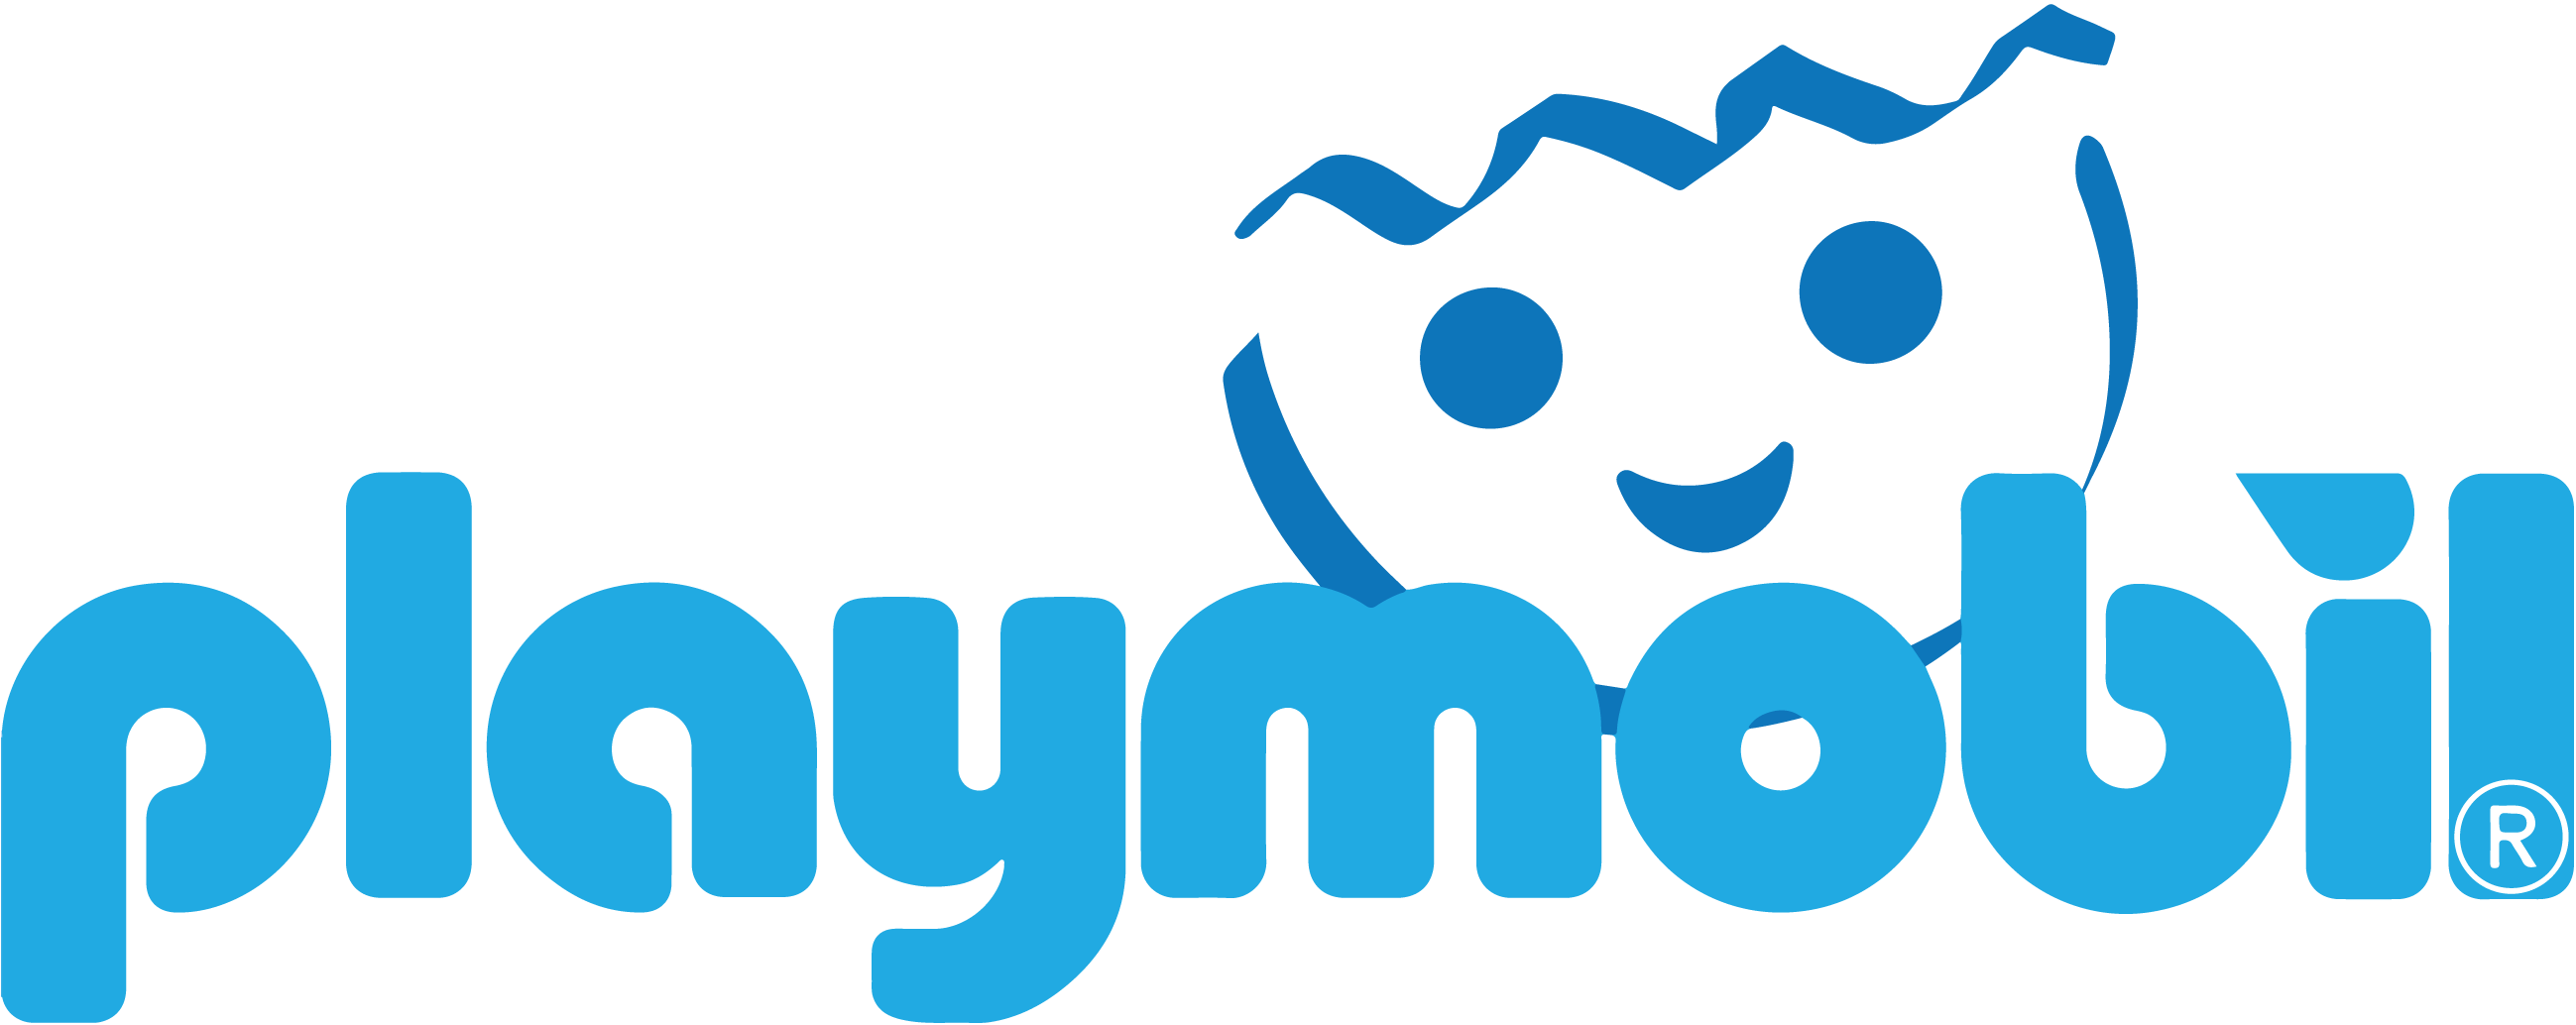 Playmobil - Playmobil Logo Png (2598x1034)